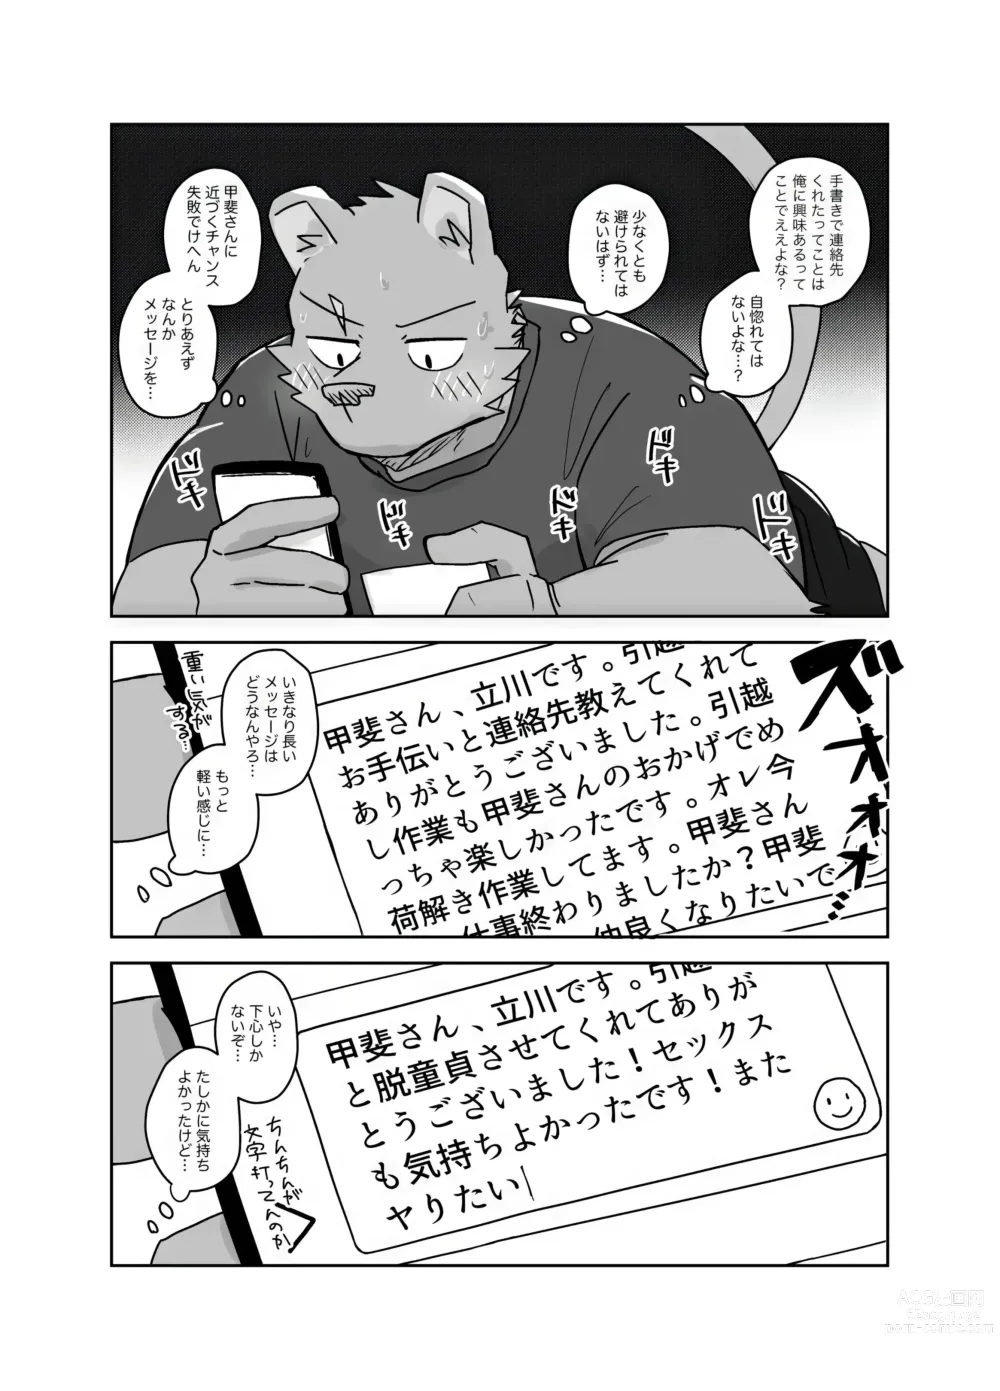 Page 2 of manga 【おまけ漫画】その日の夜